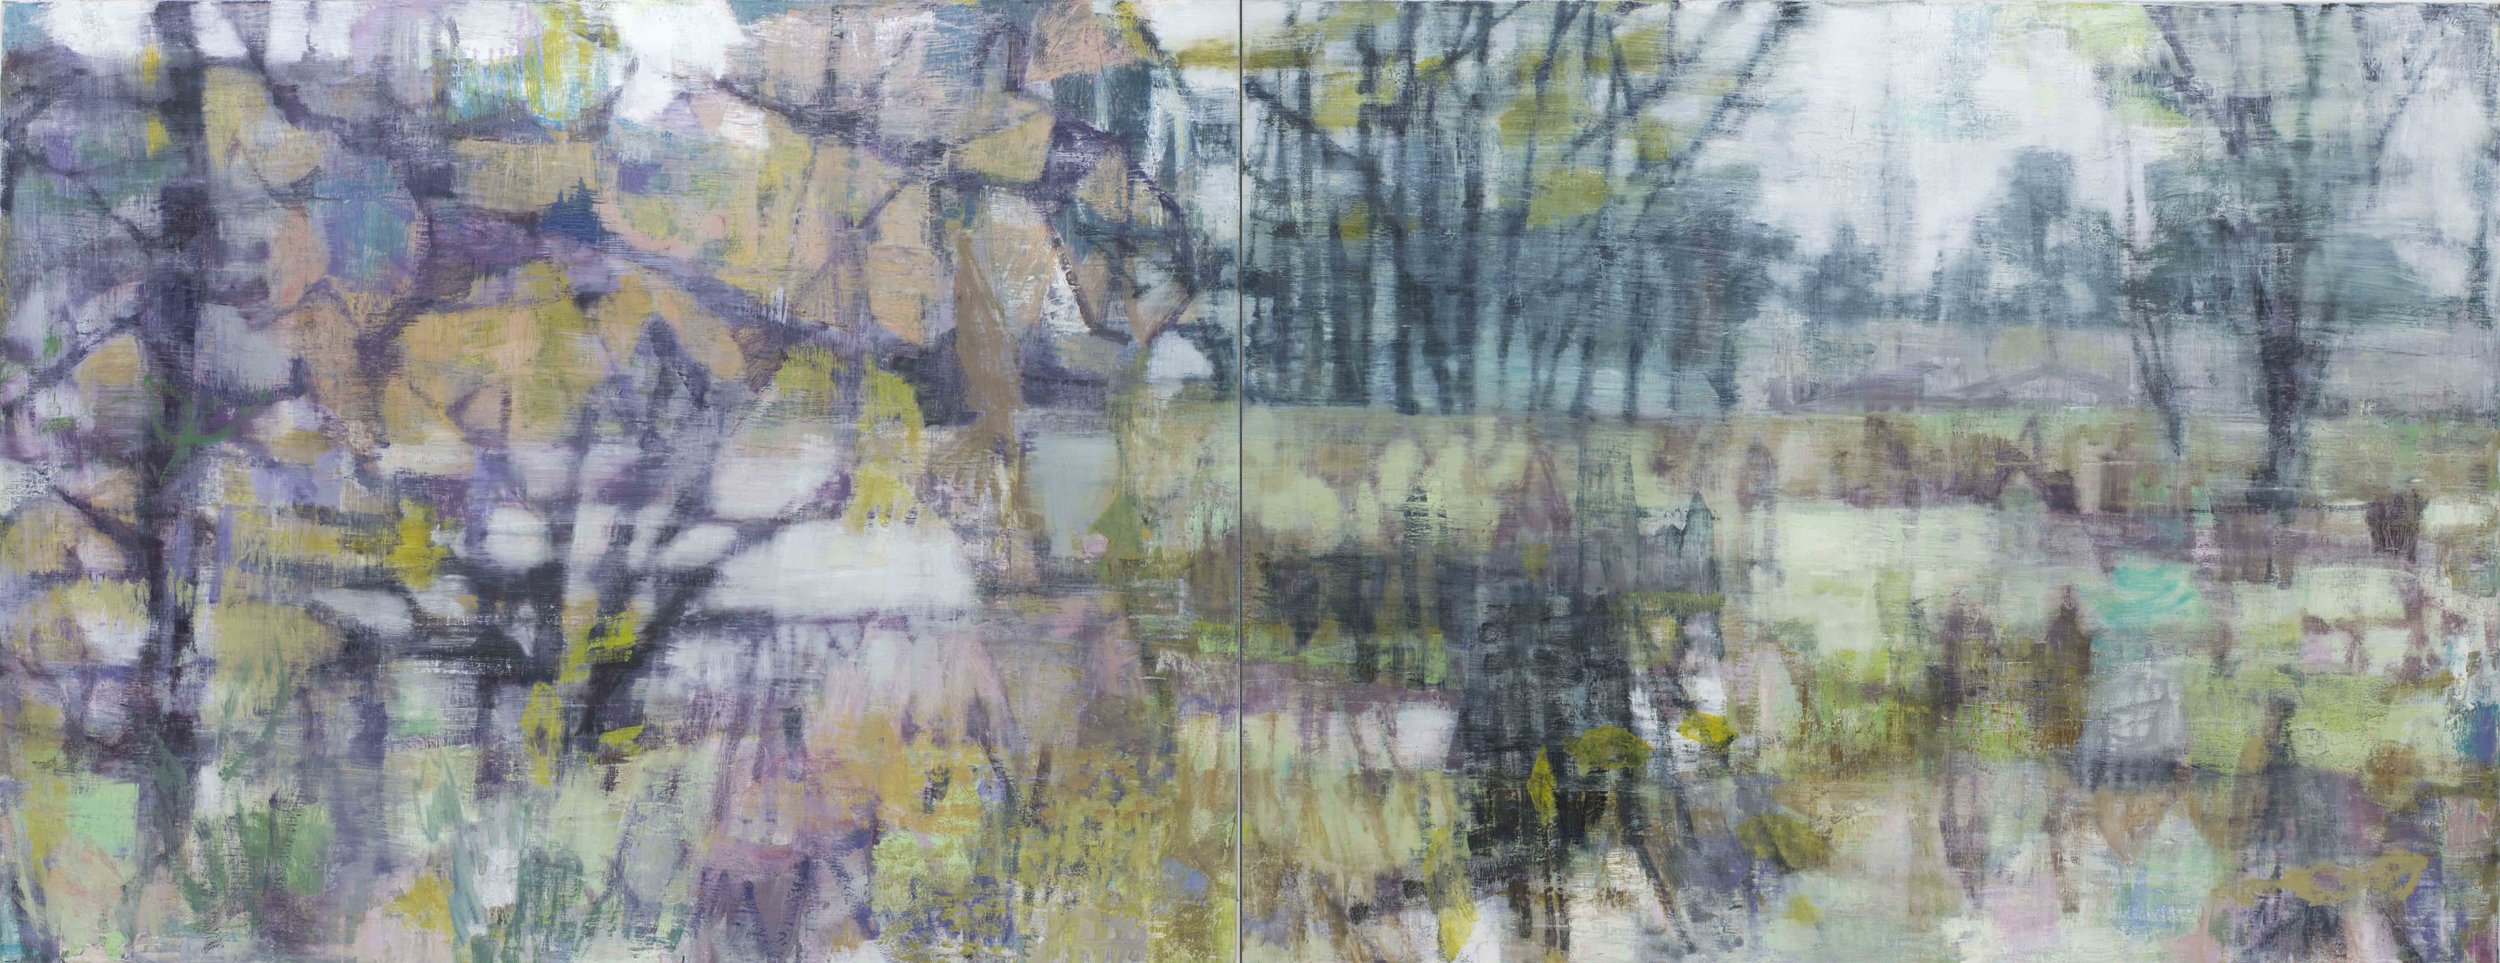  Joanna Logue,&nbsp; Heartland I , 2016, oil on linen, 130 x 340cm 